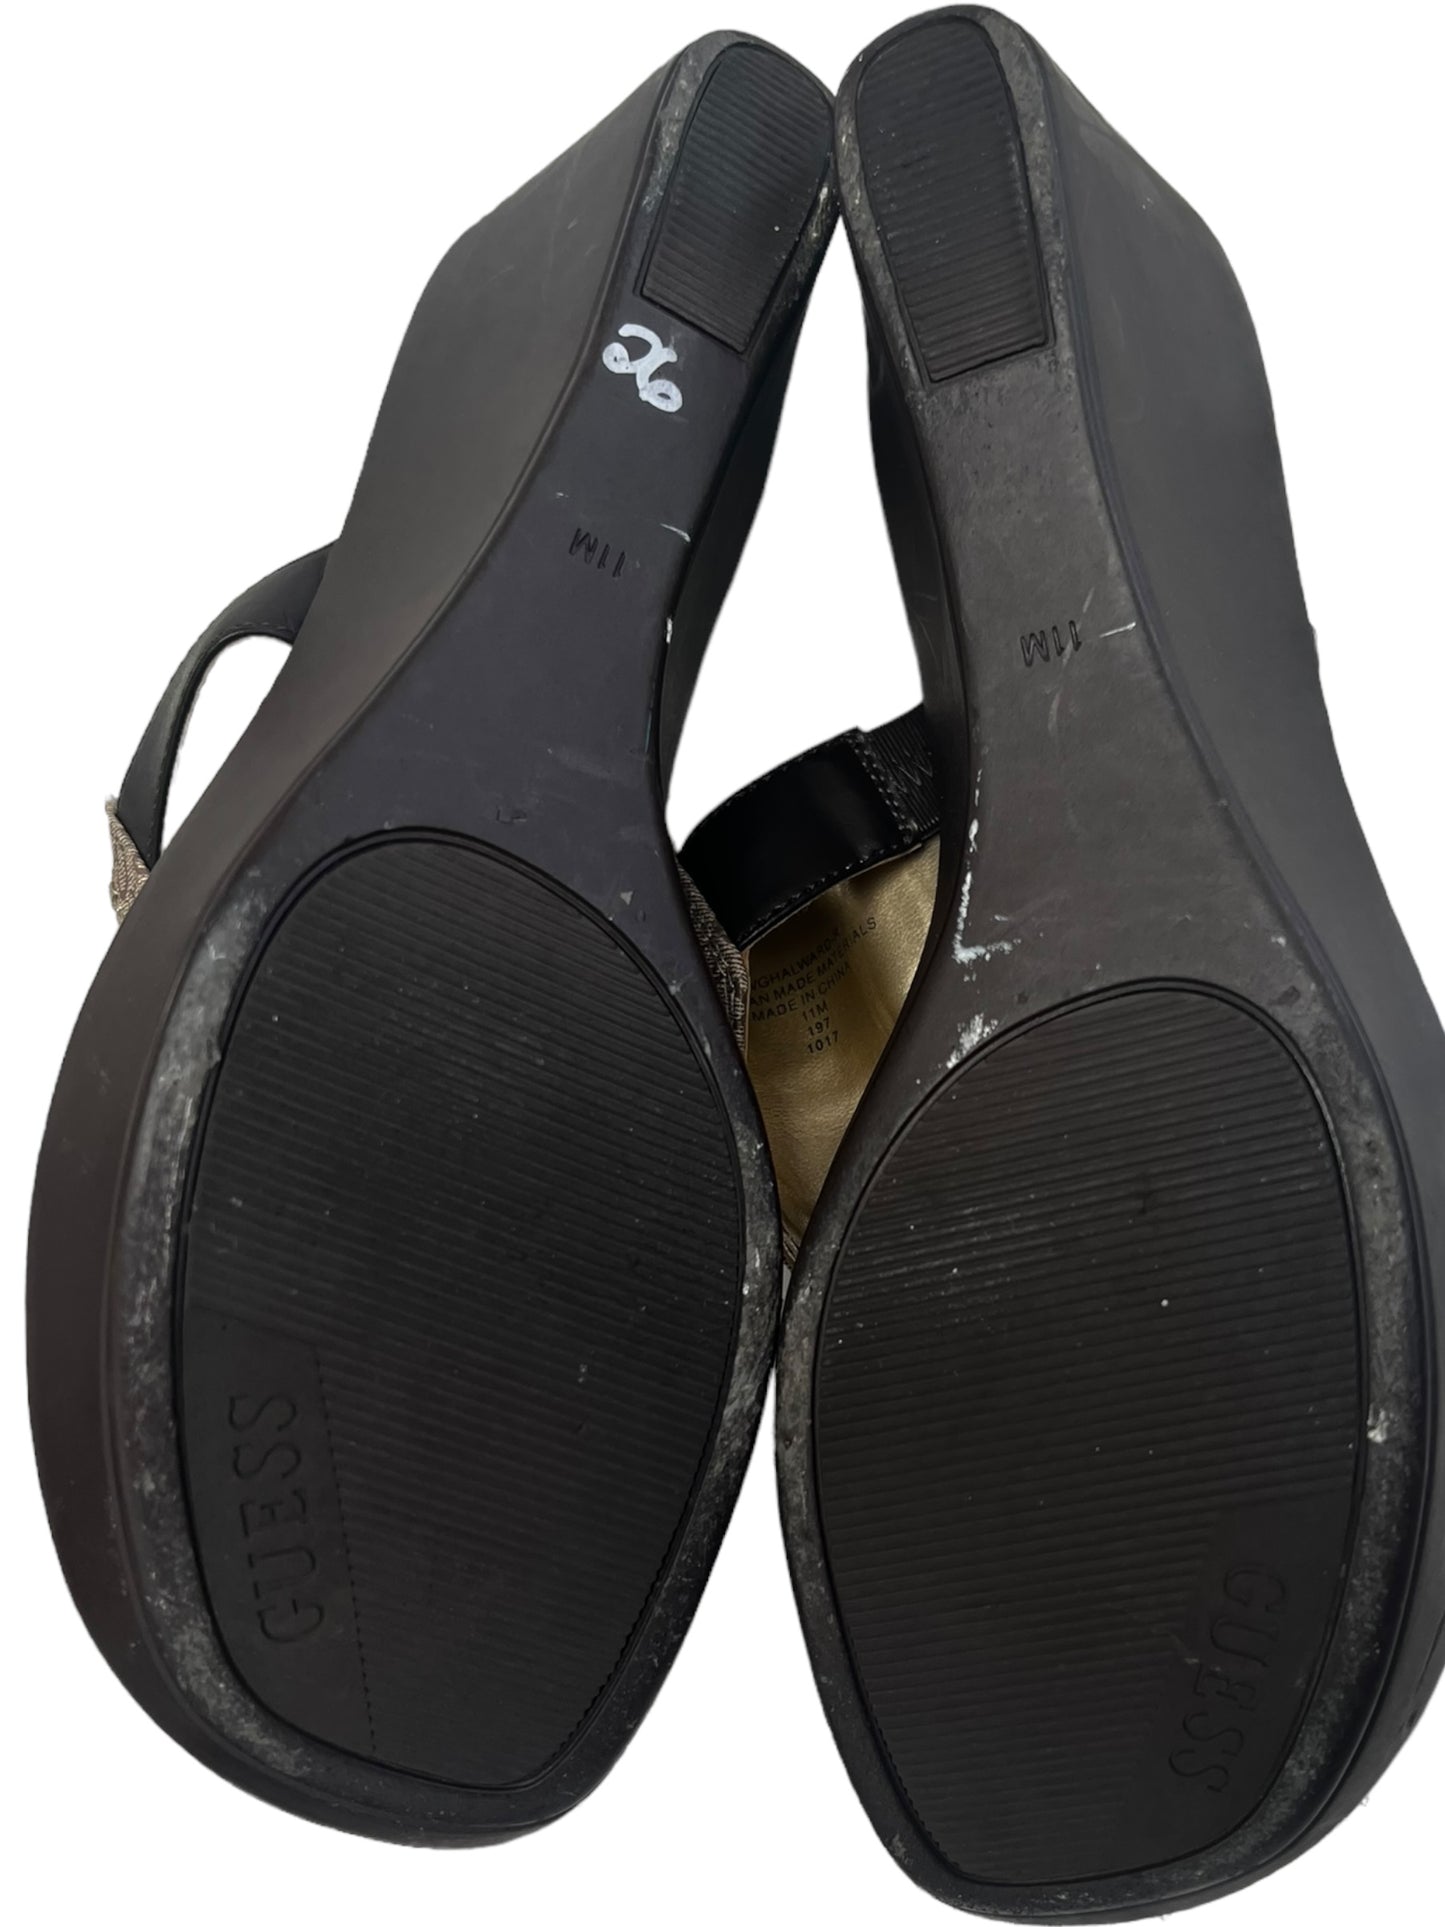 Guess dark brown wedge sandals